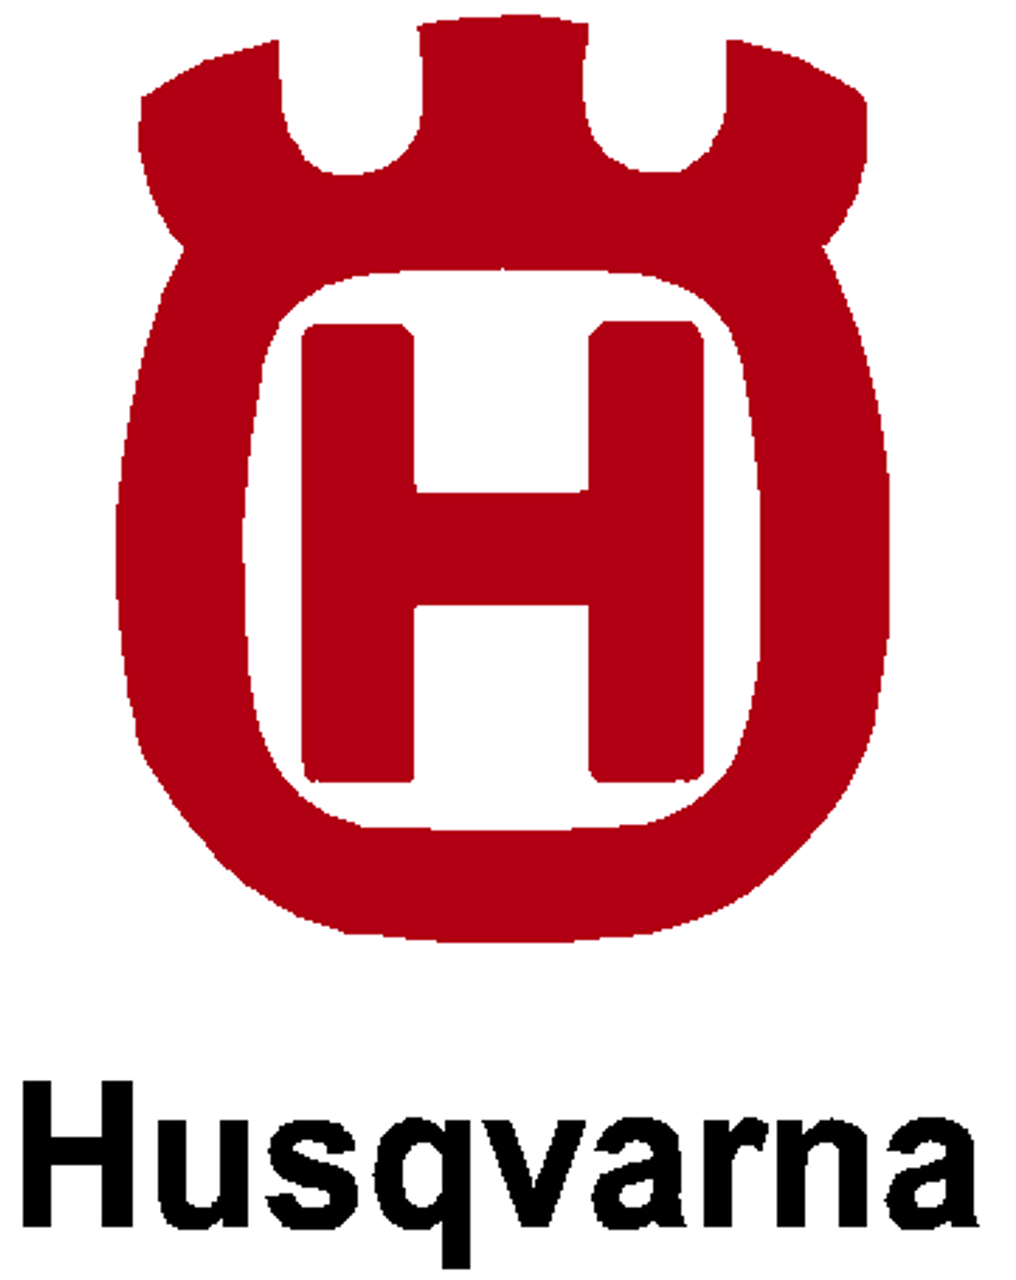 husqvarna logo red